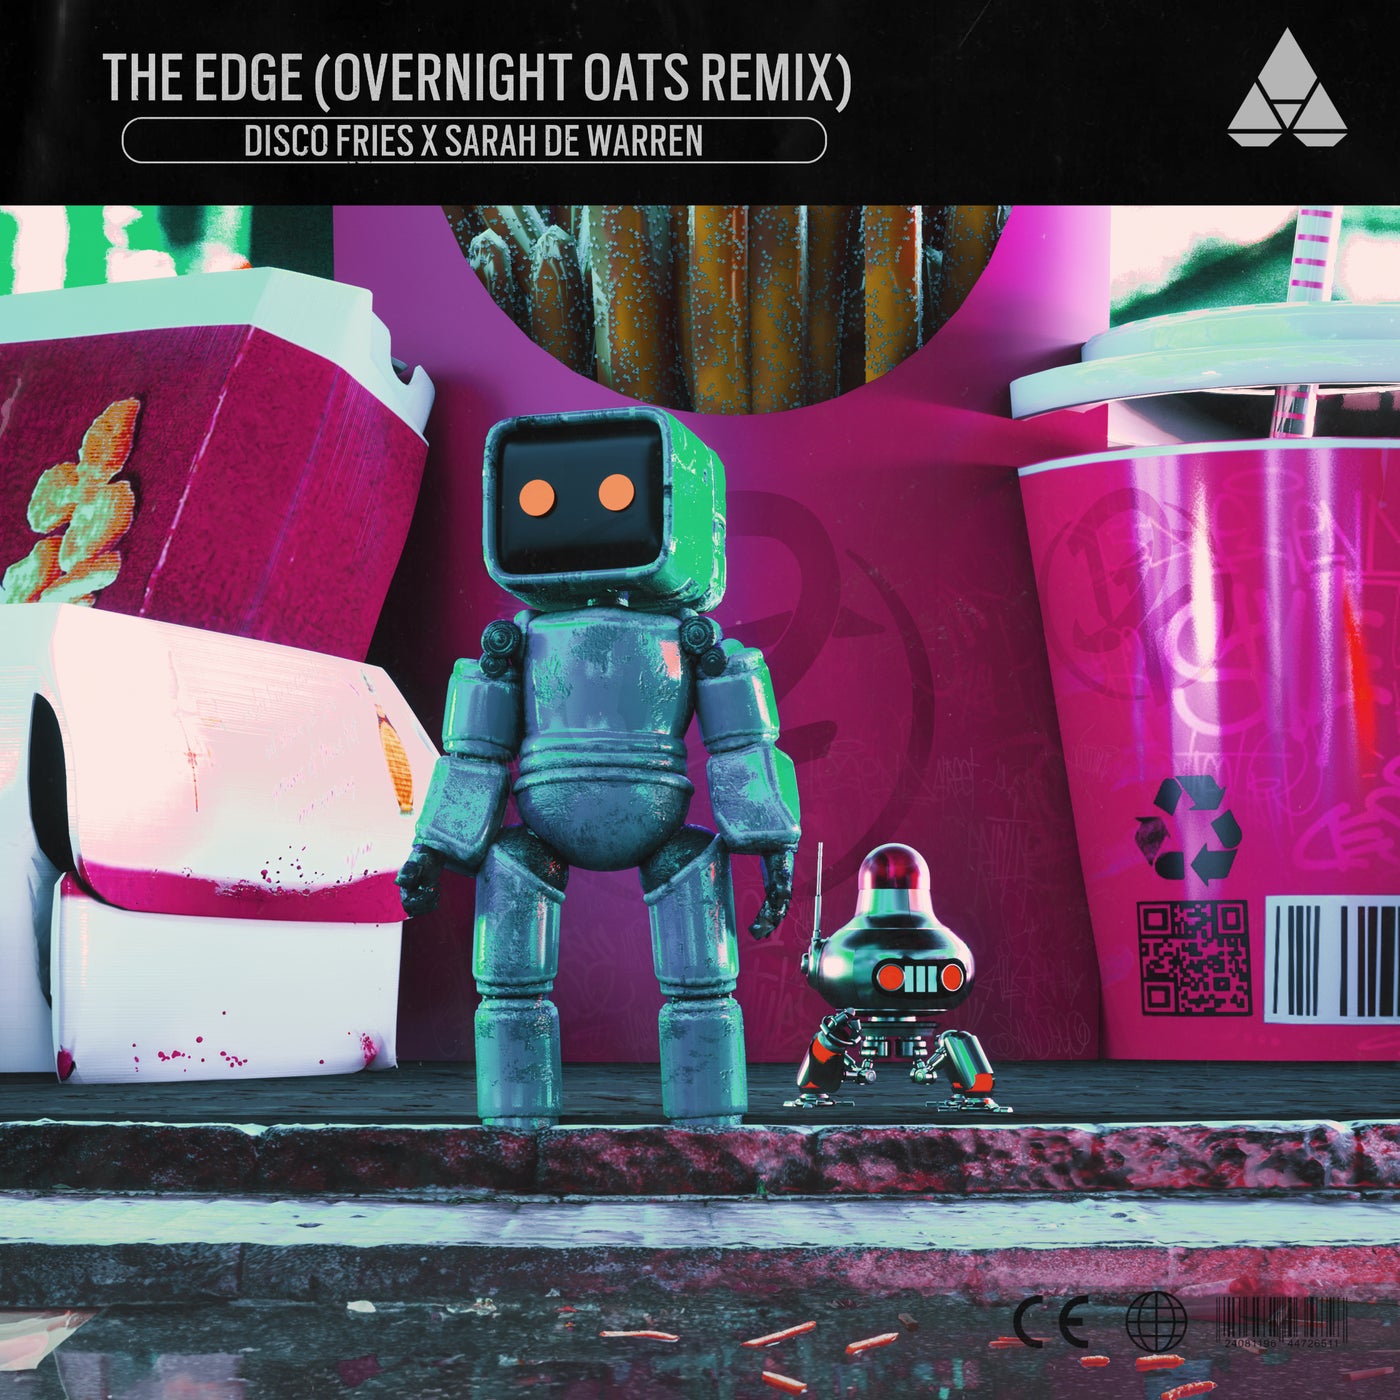 The Edge (Overnight Oats Remix)